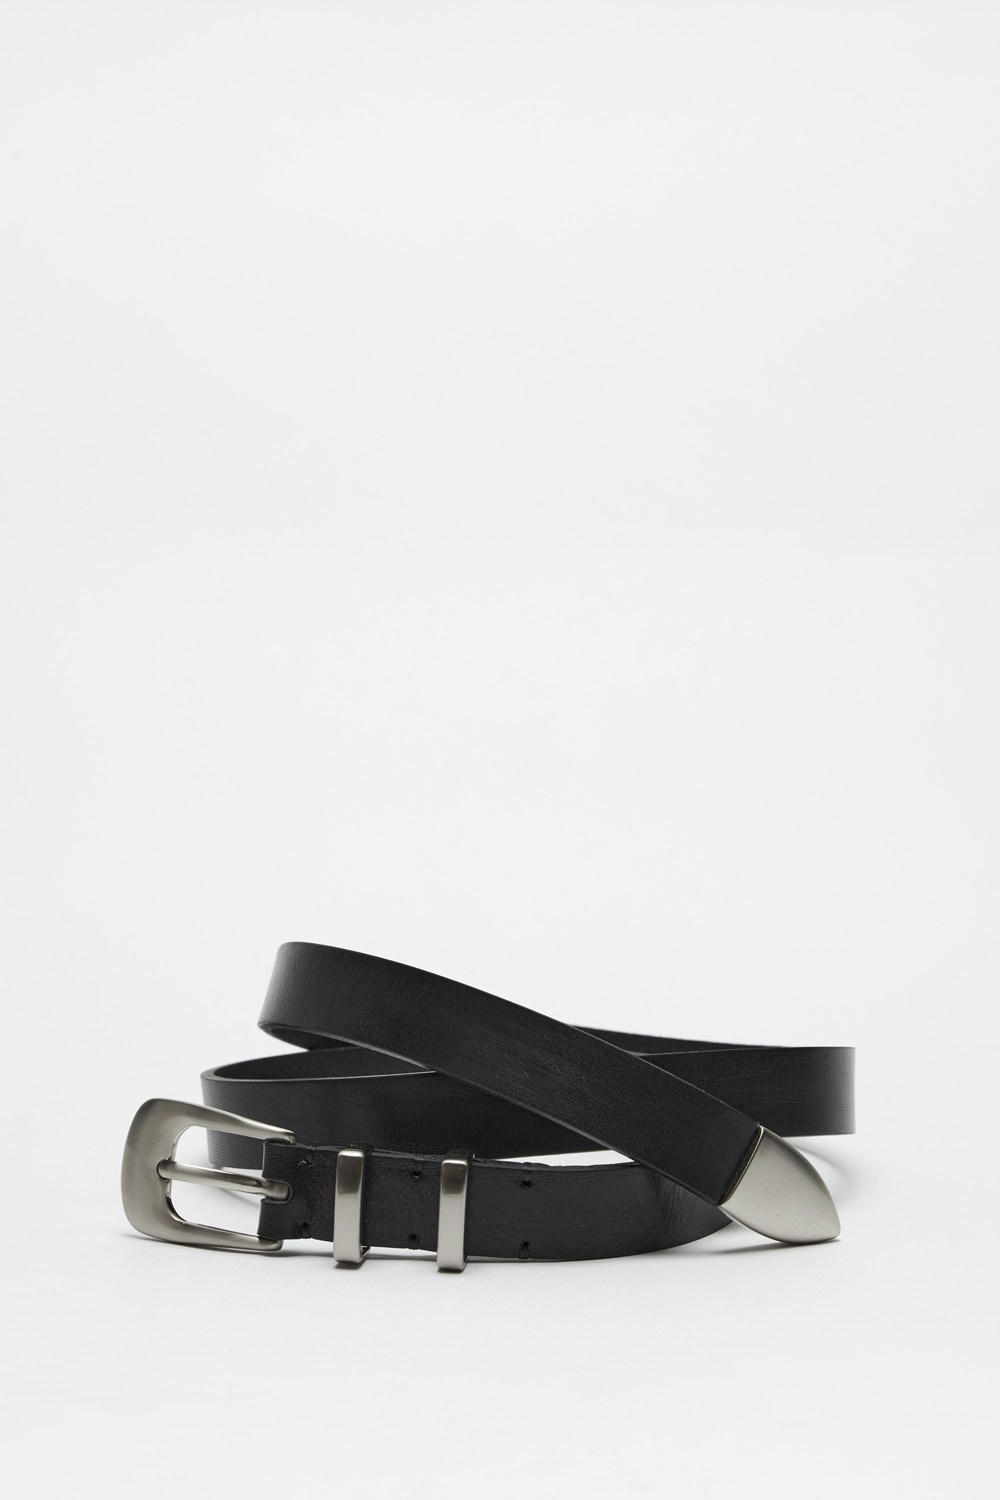 Western Leather Belt (M)_Black